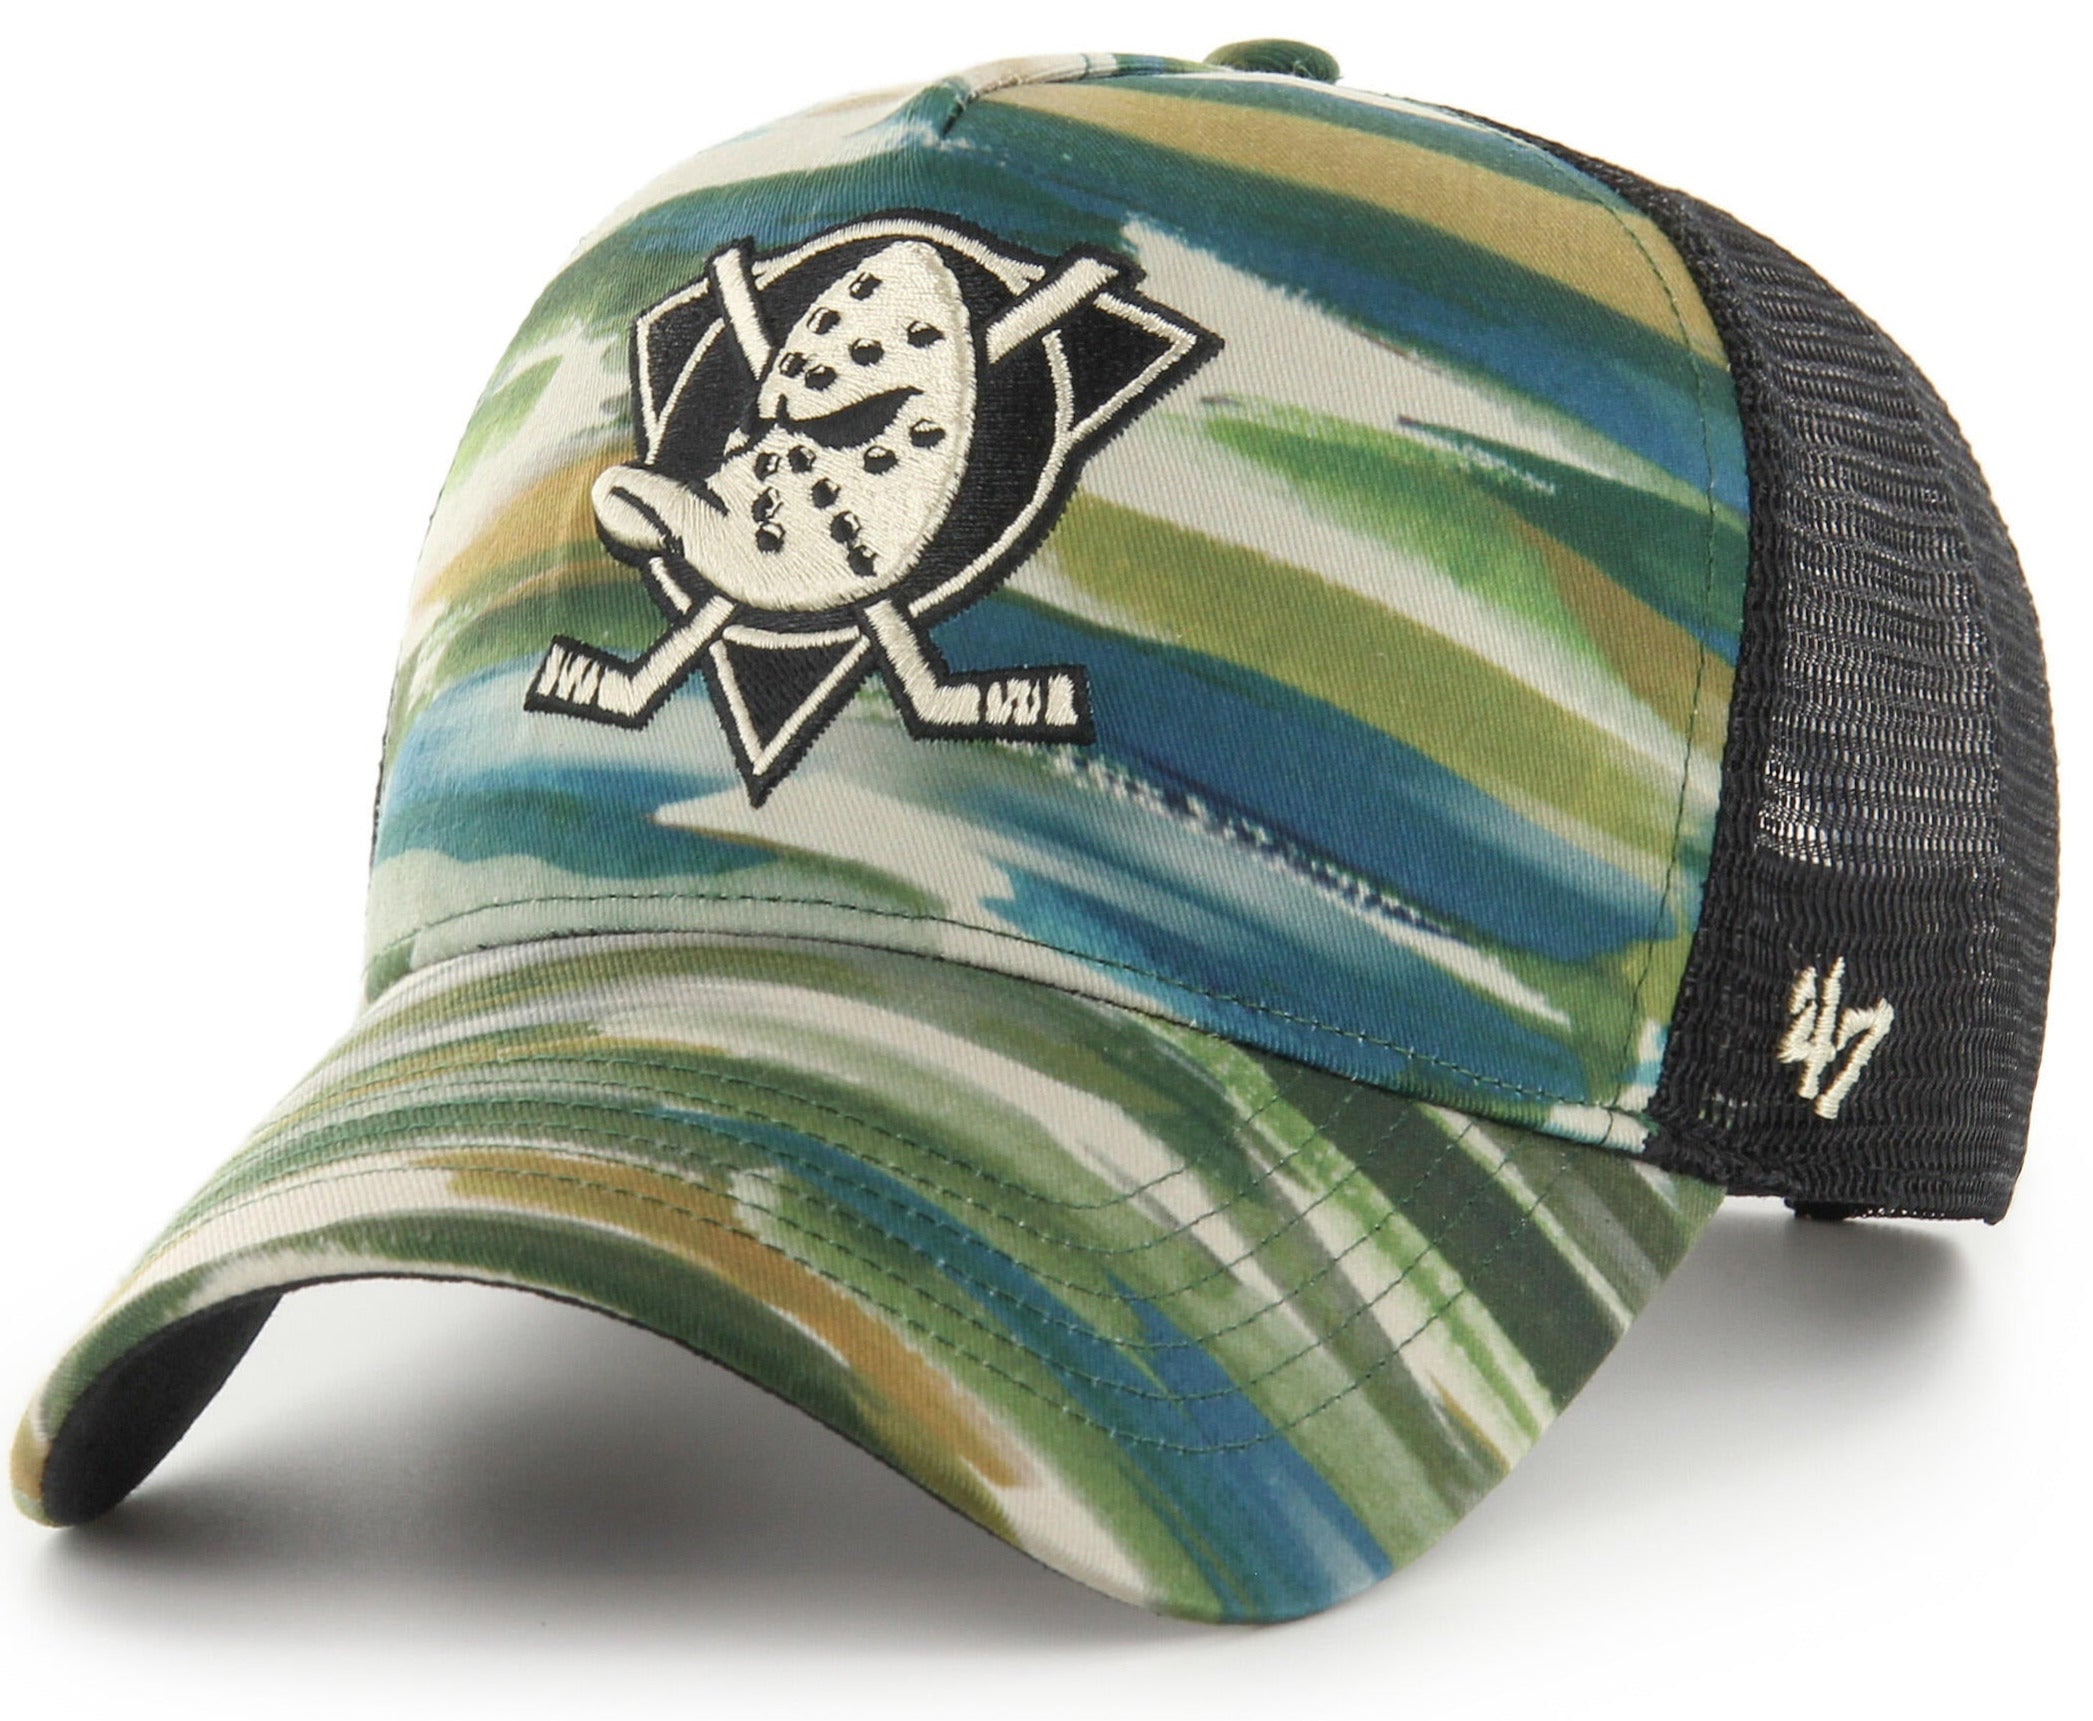 San Jose Sharks 47 Brand MVP Adjustable Black NHL Cap